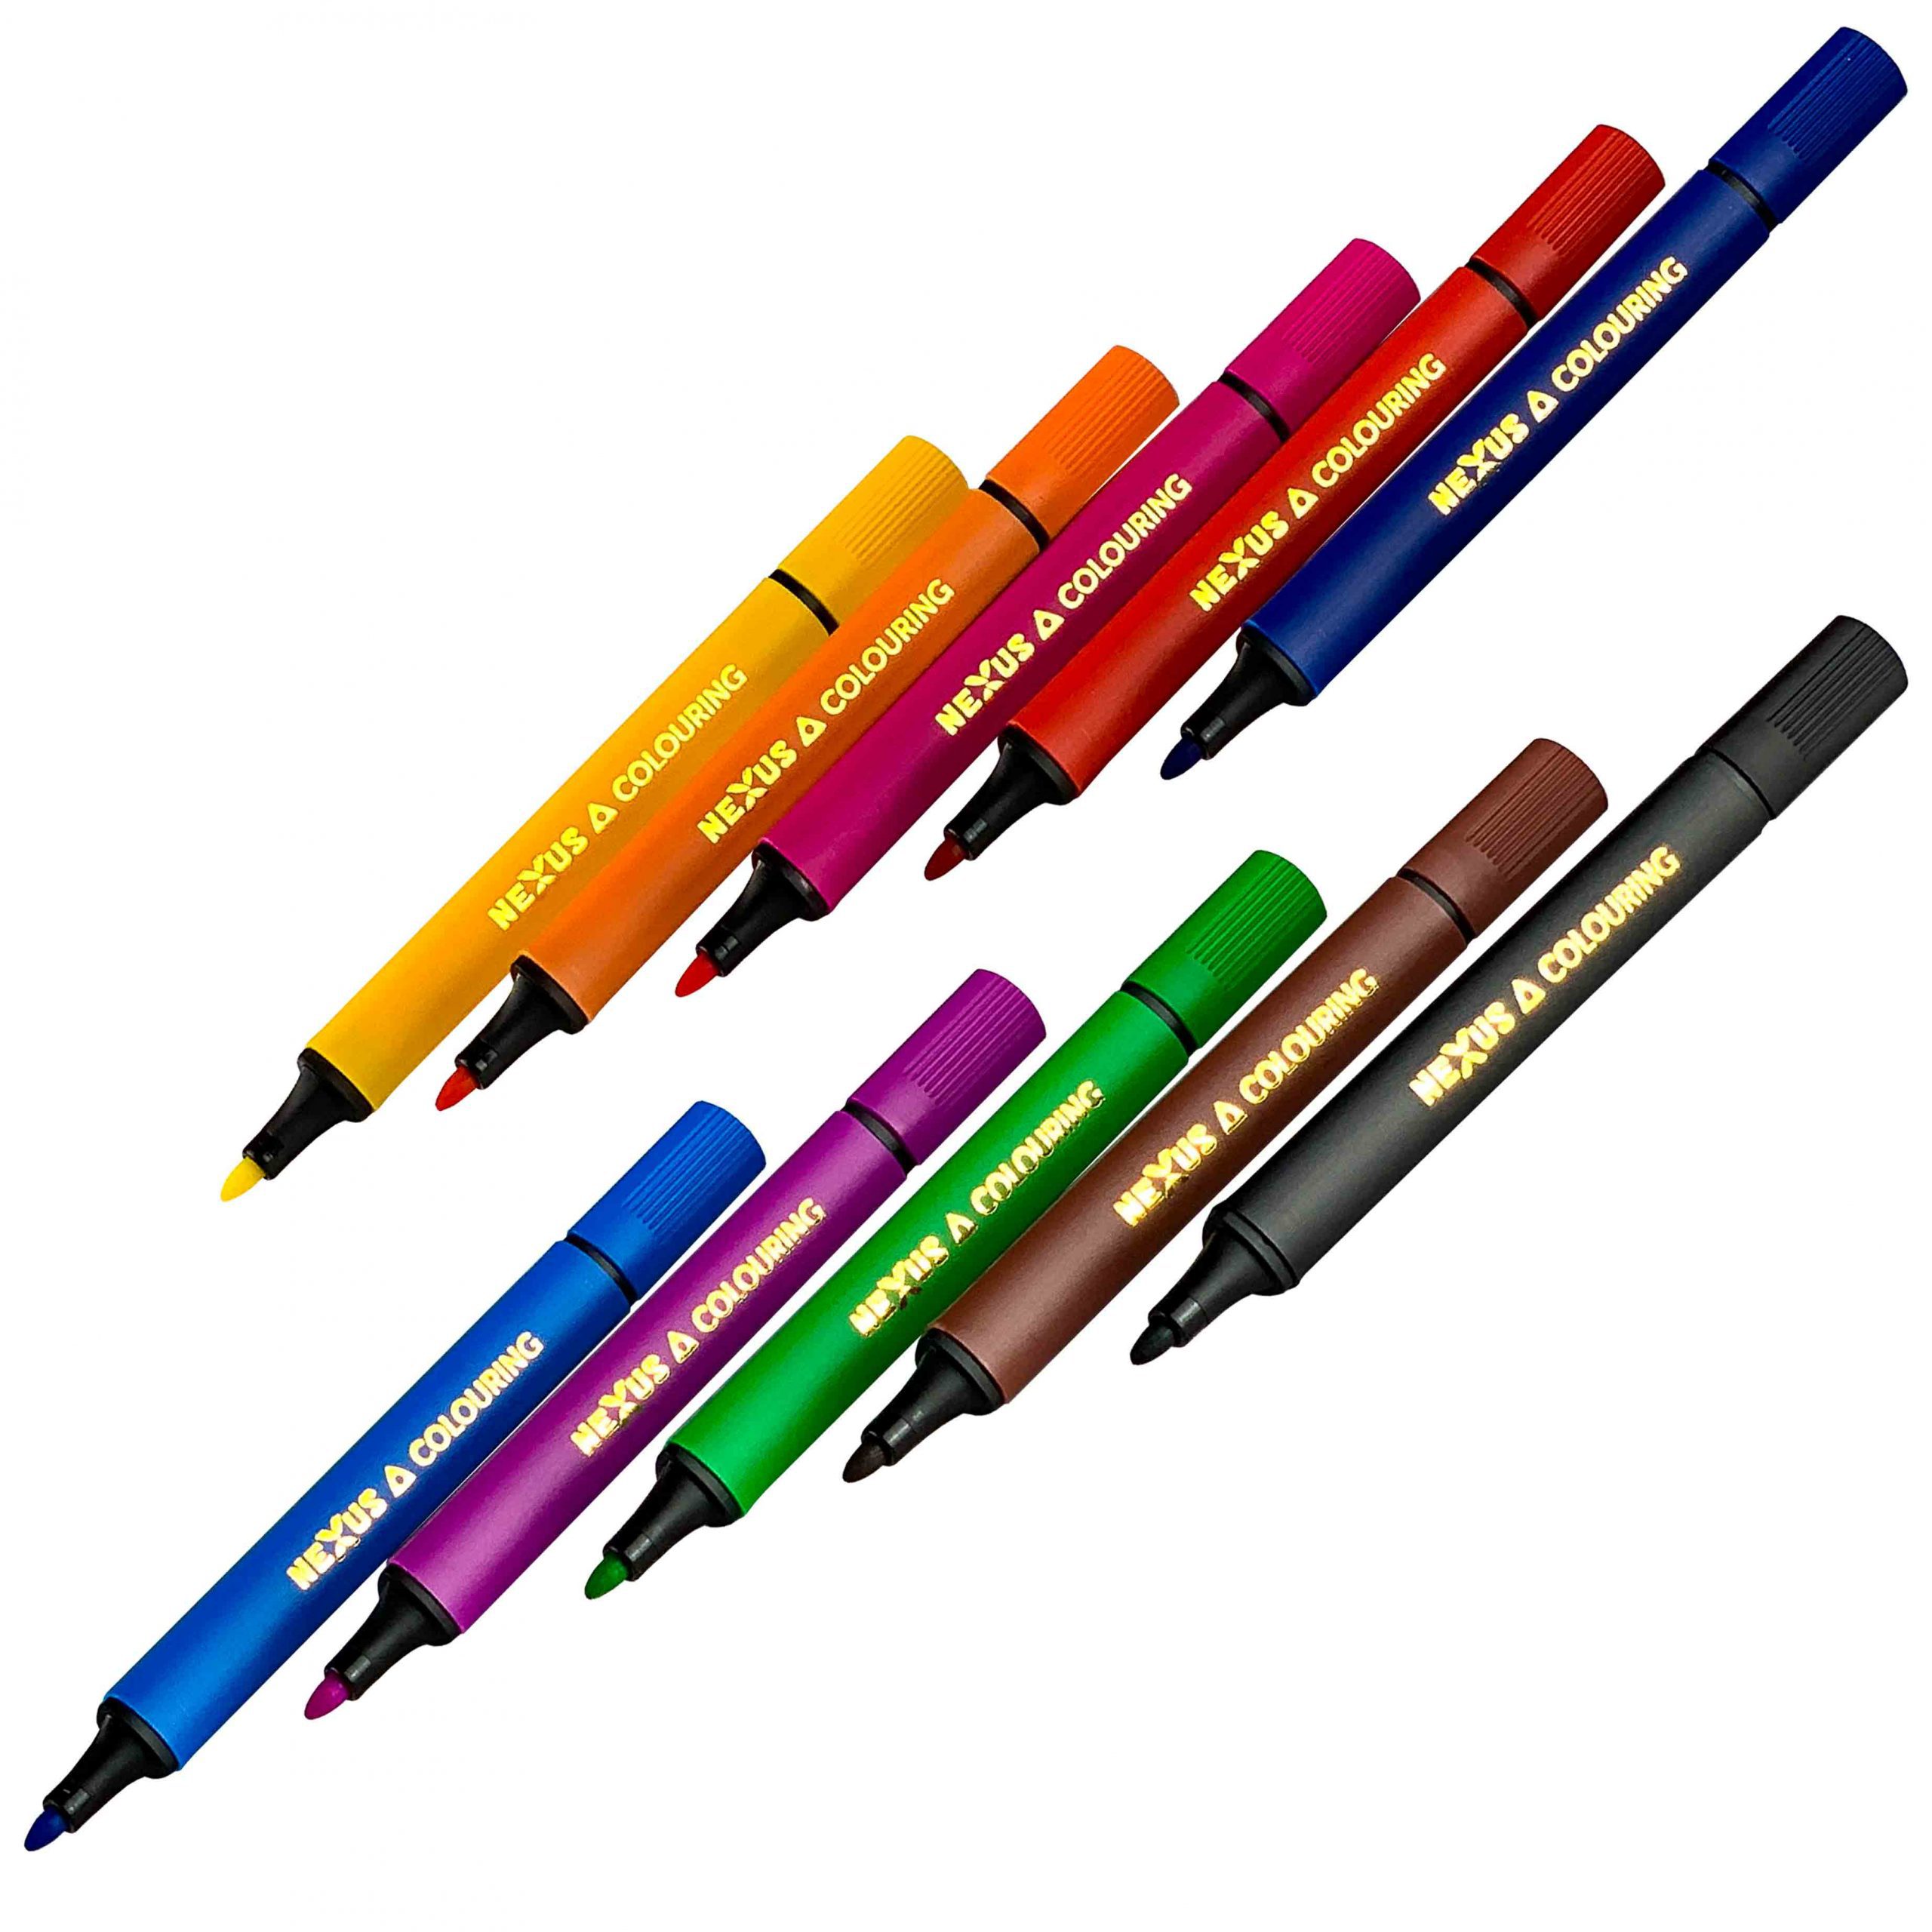 https://learnplaynexus.com/content/uploads/2020/11/205000-Triangular-Colouring-Pens-2022-scaled.jpg